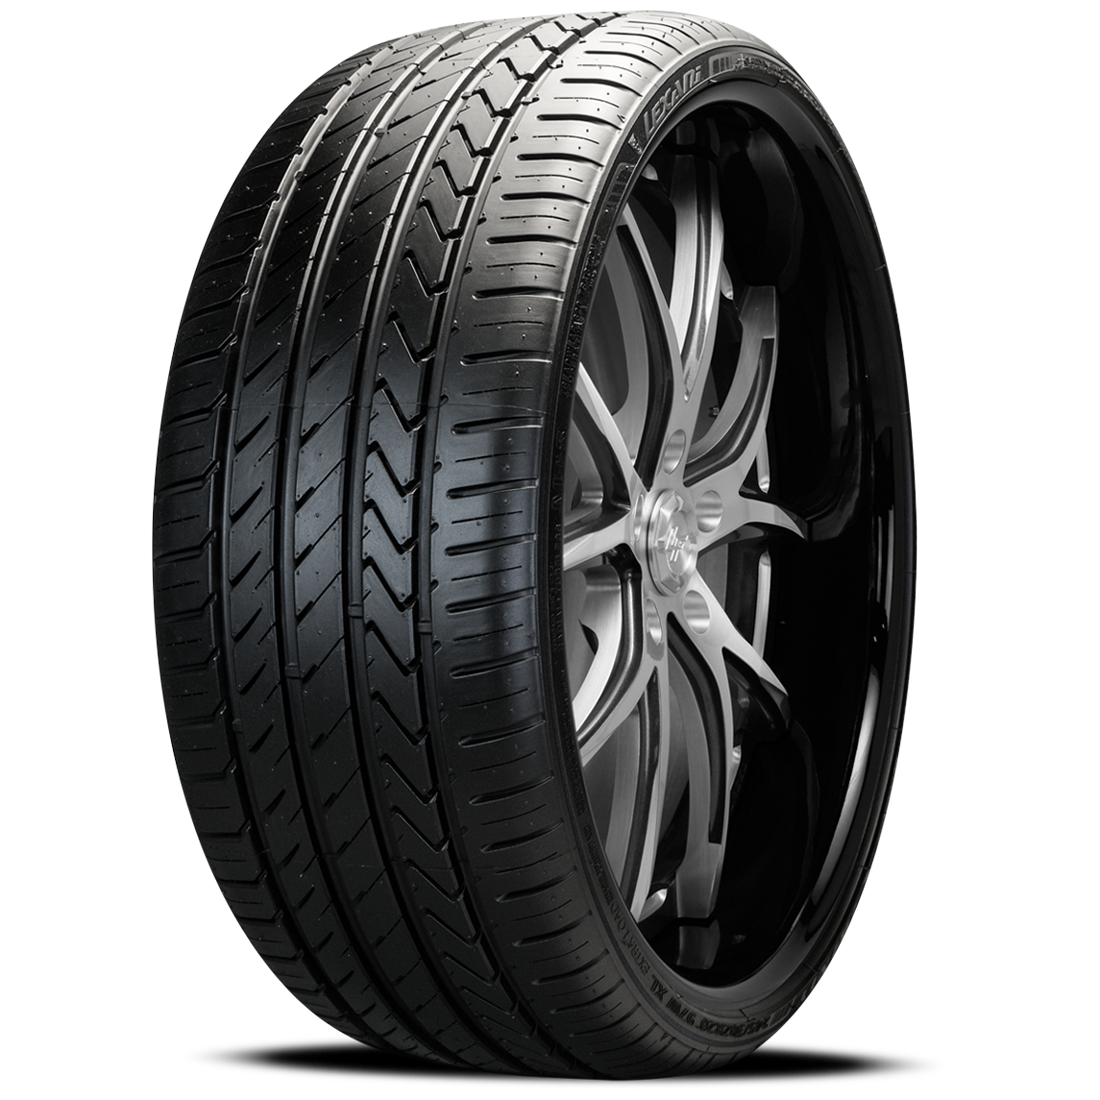 LEXANI LX-TWENTY 295/30ZR24 (31.5X11.9R 24) Tires